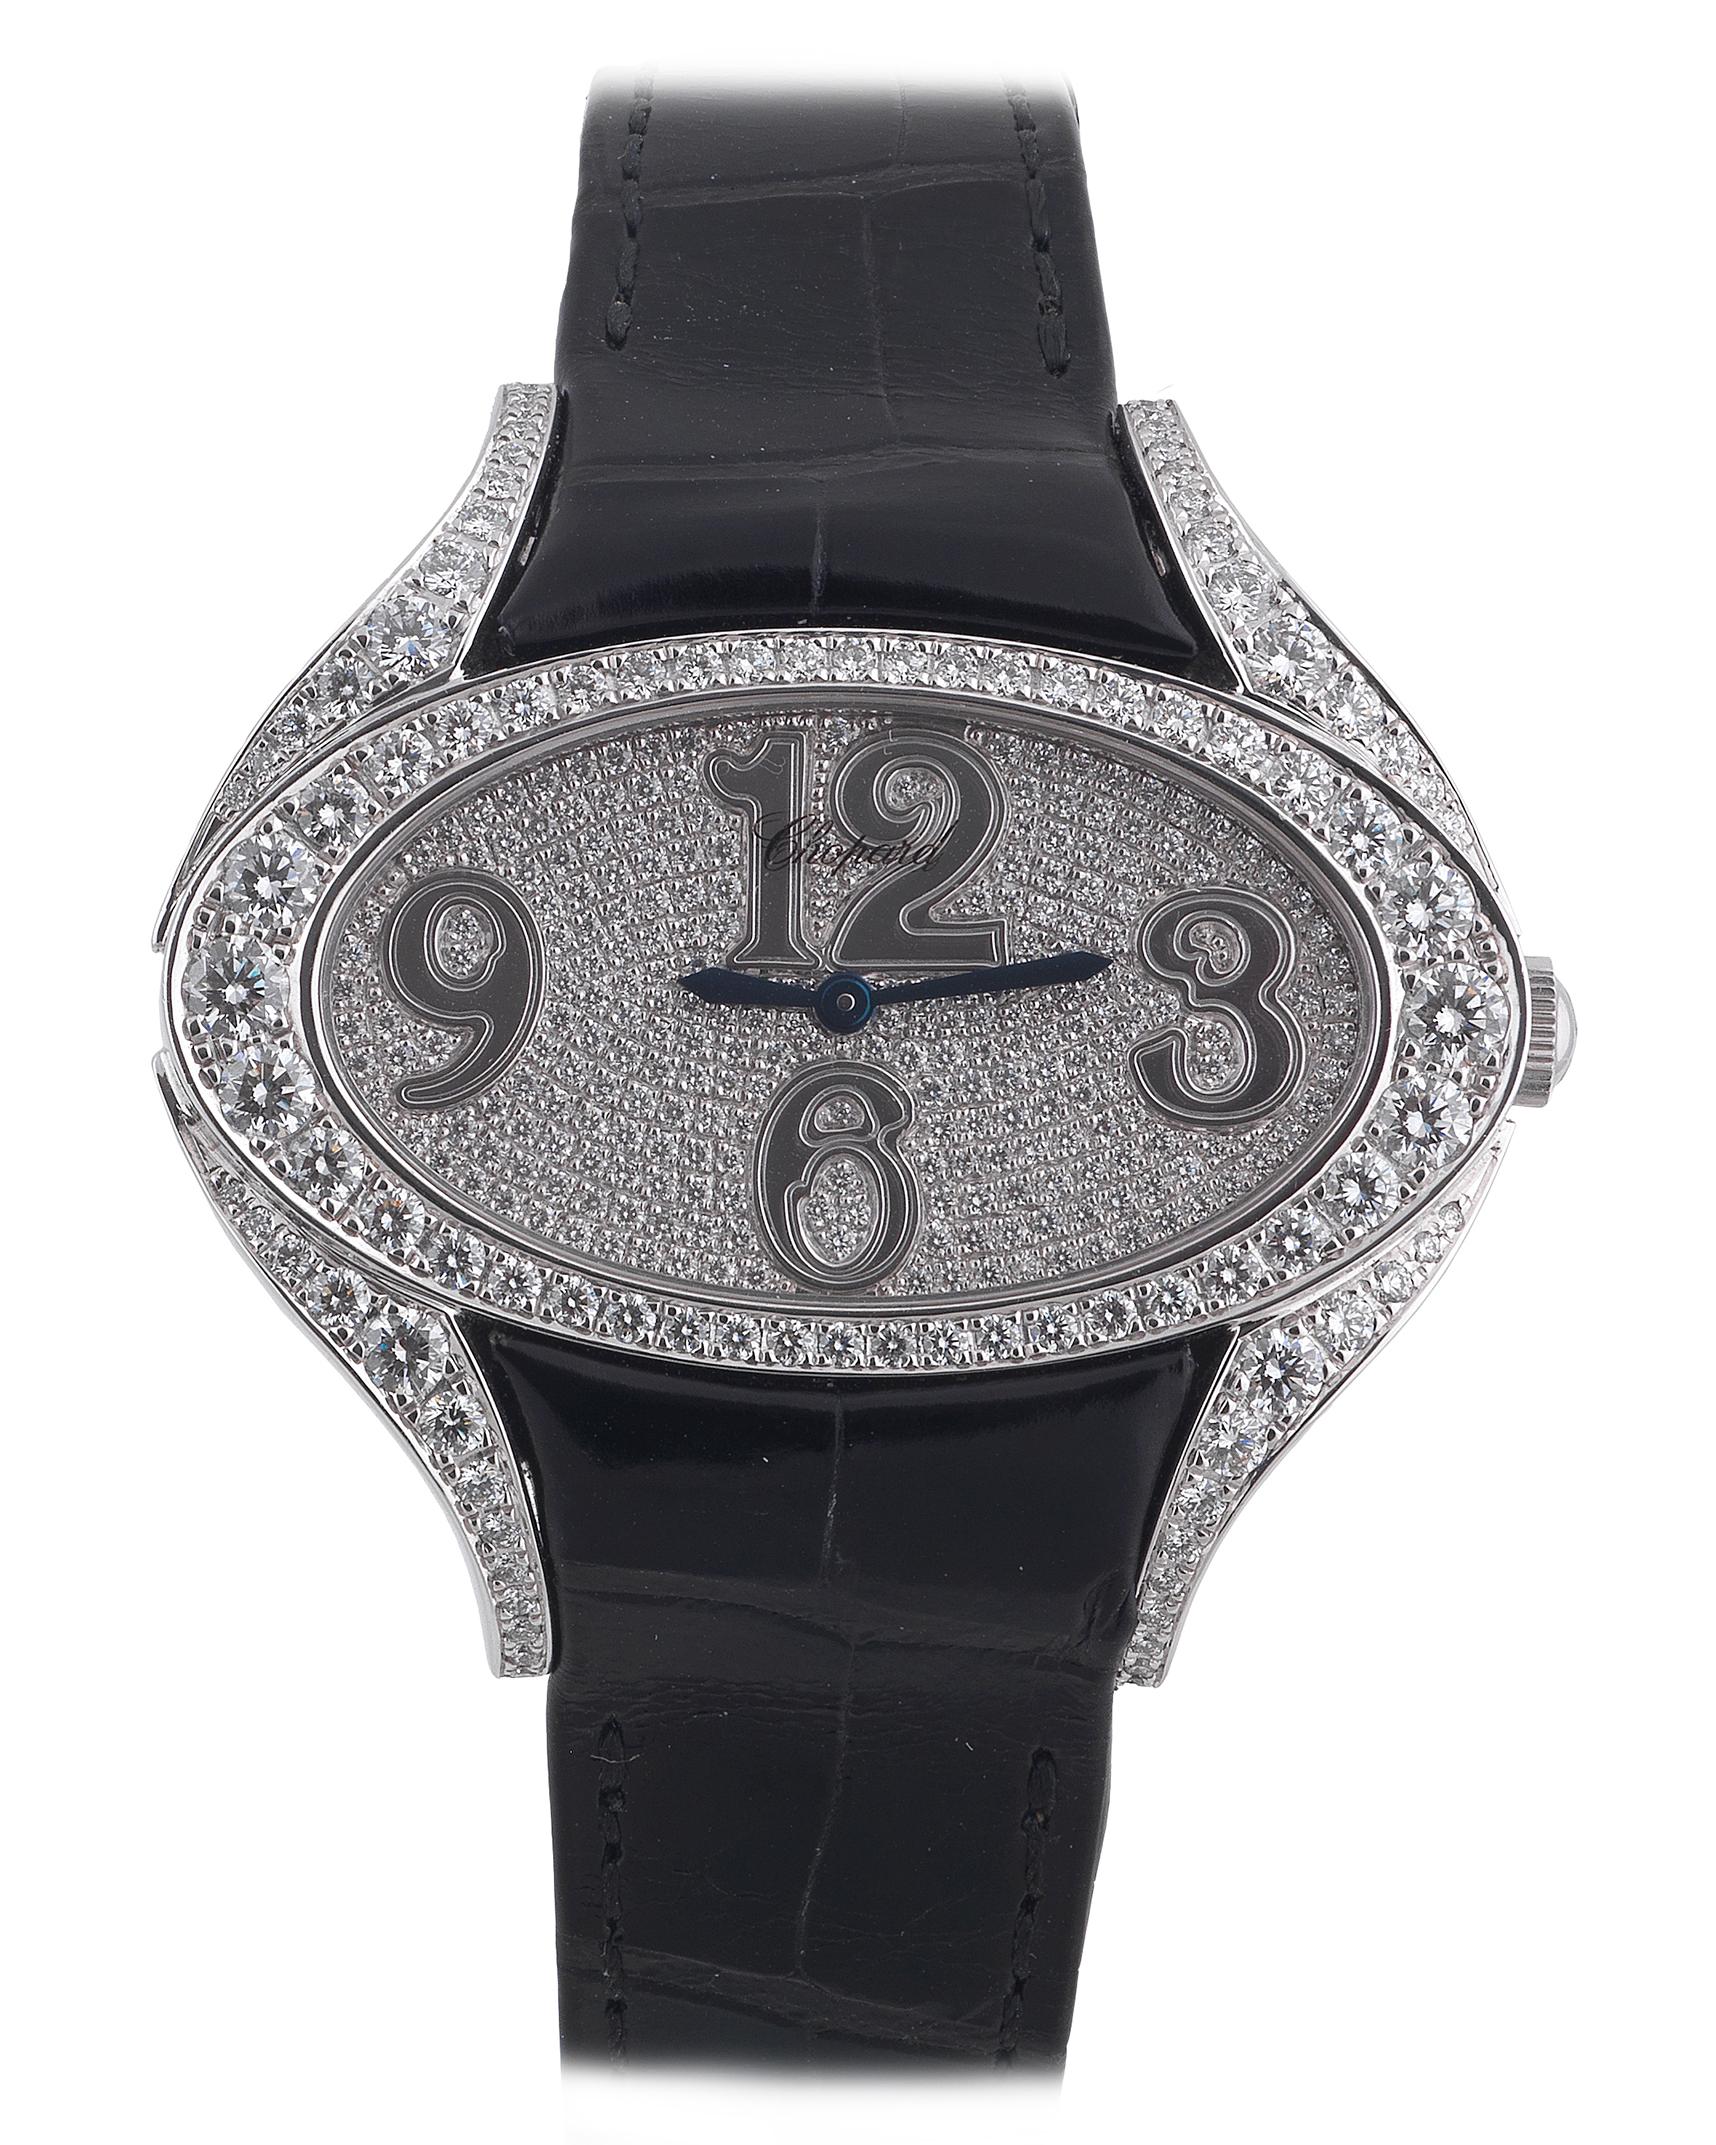 Brilliant Cut 18kt White Gold and Diamond Chopard Wristwatch